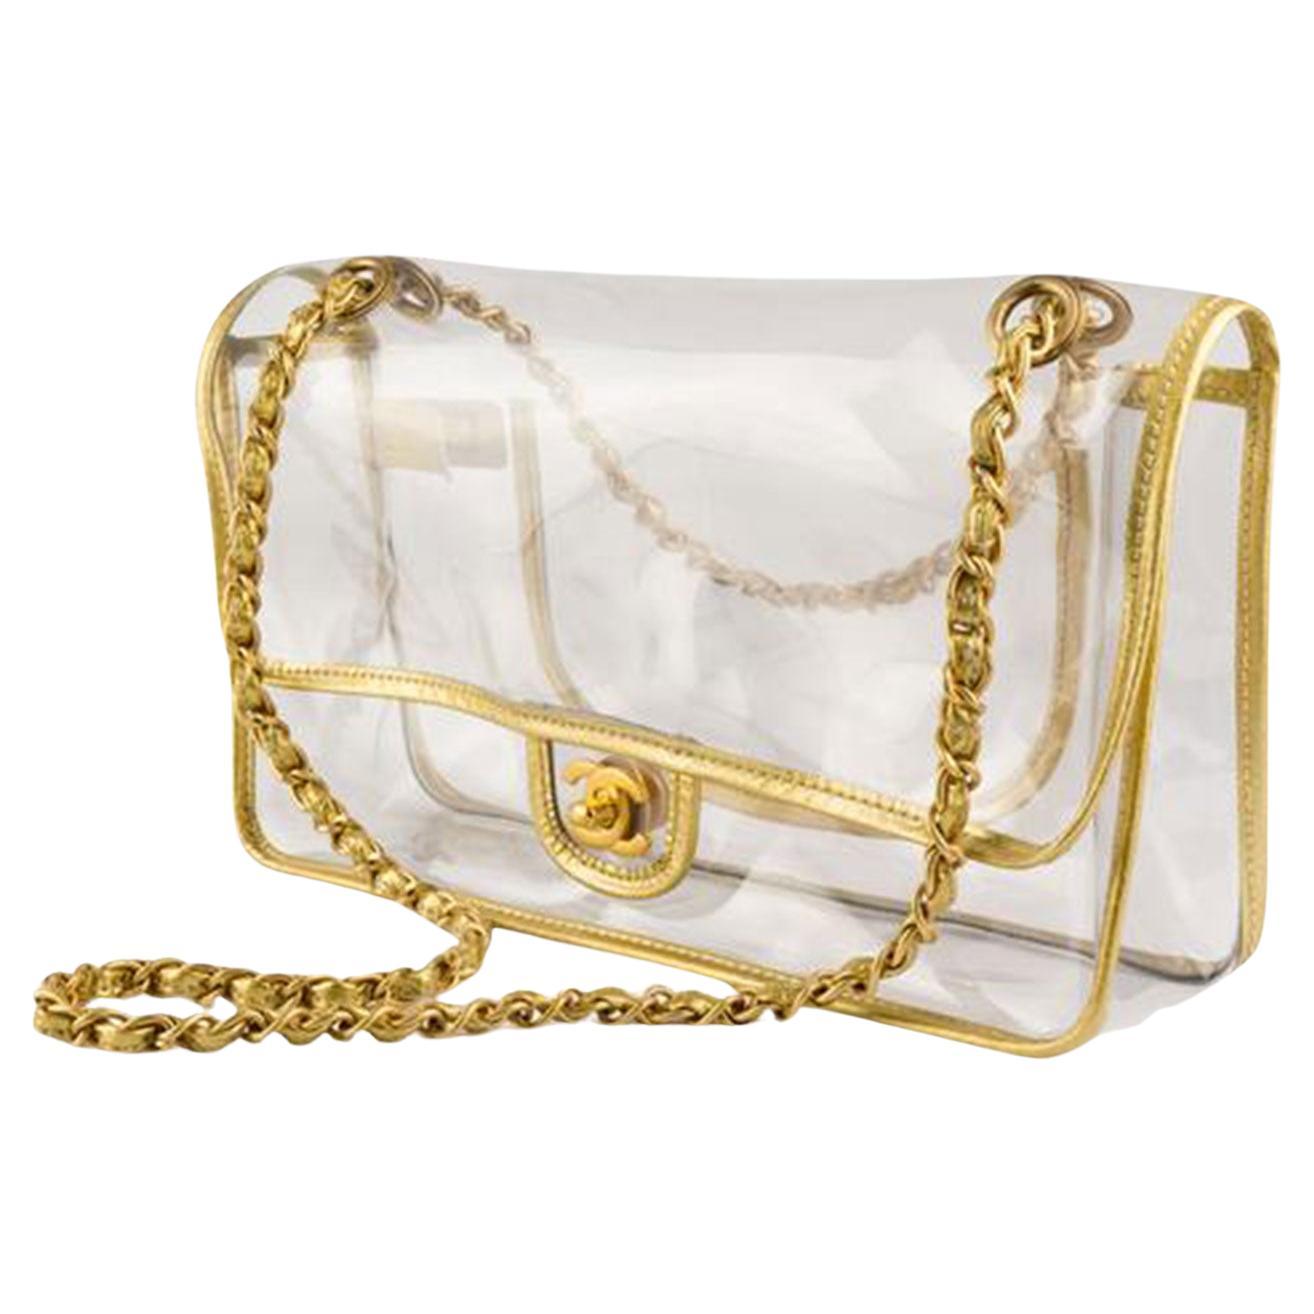 Chanel Vintage Gold Flap - 512 For Sale on 1stDibs  chanel classic flap  gold, chanel gold classic flap, chanel golden class flap bag